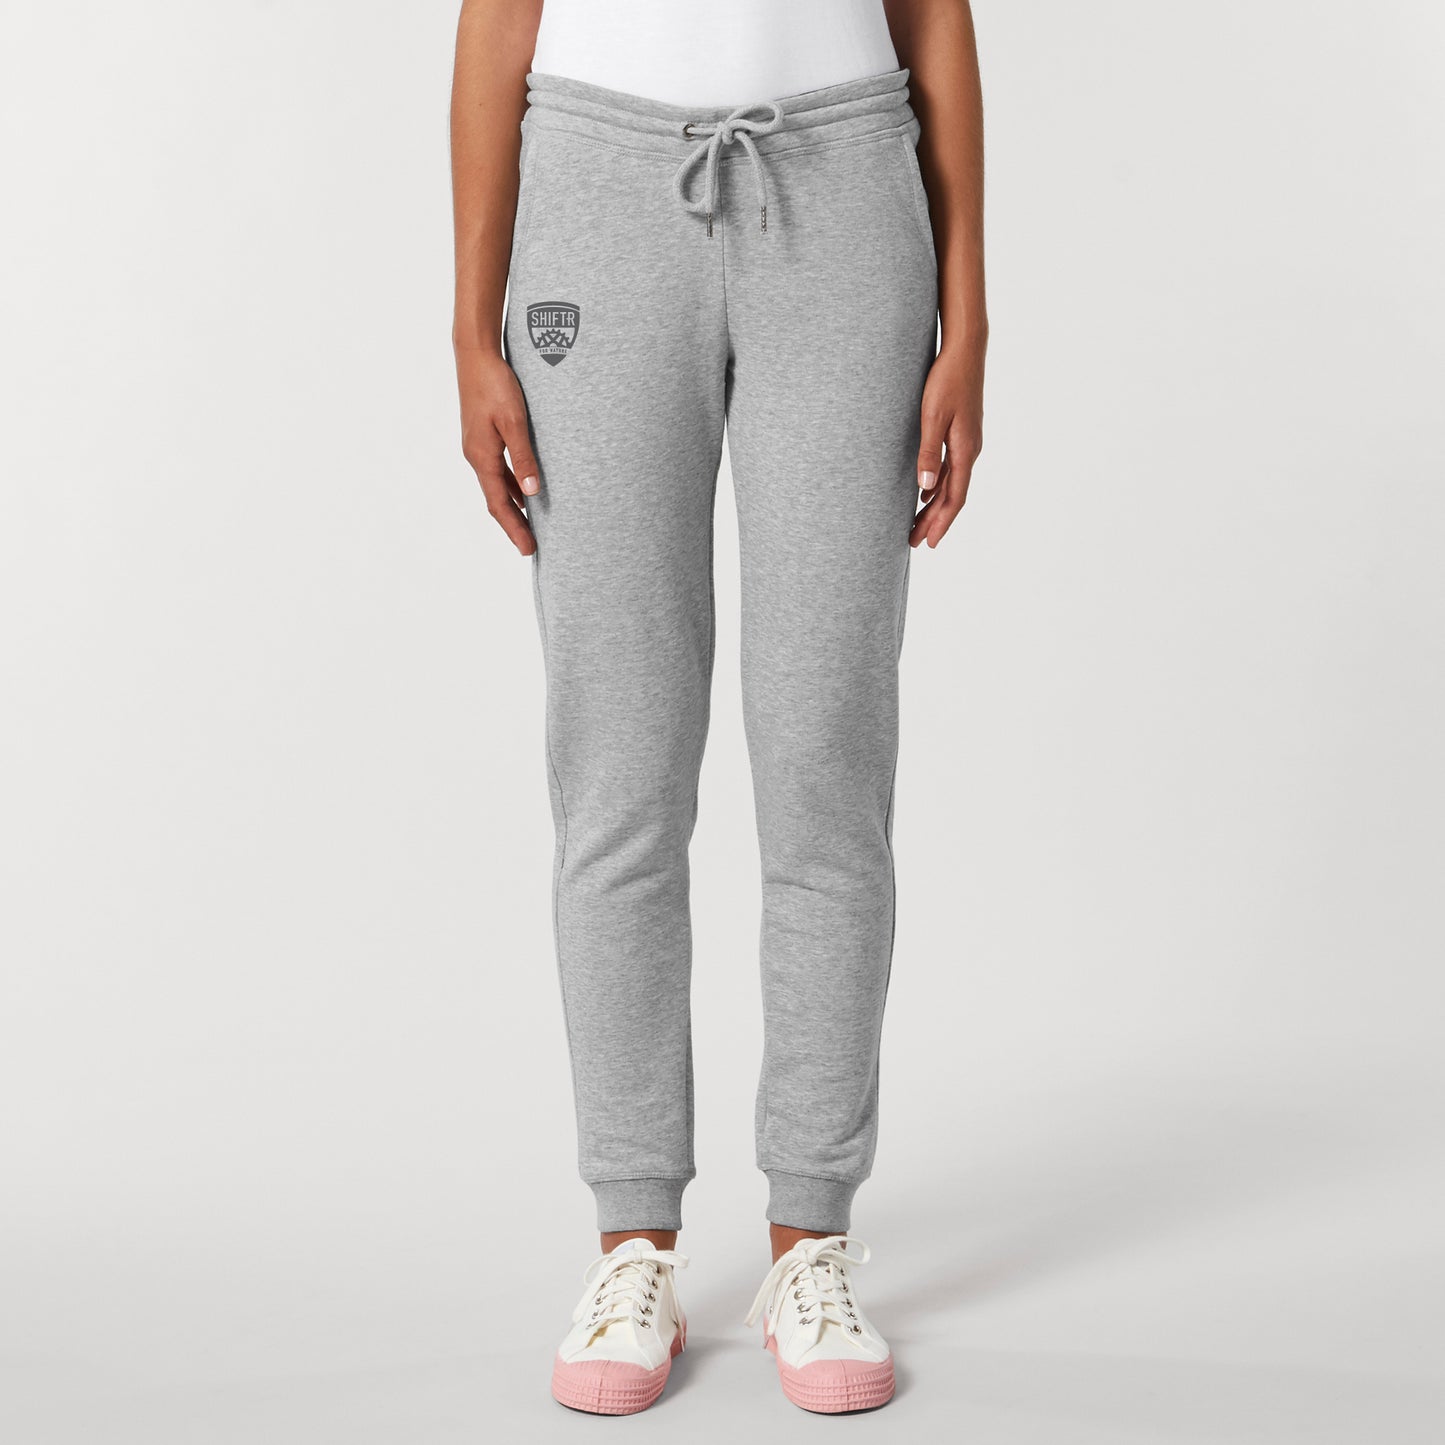 SHIFTR Ladies Sweatpants - Grey